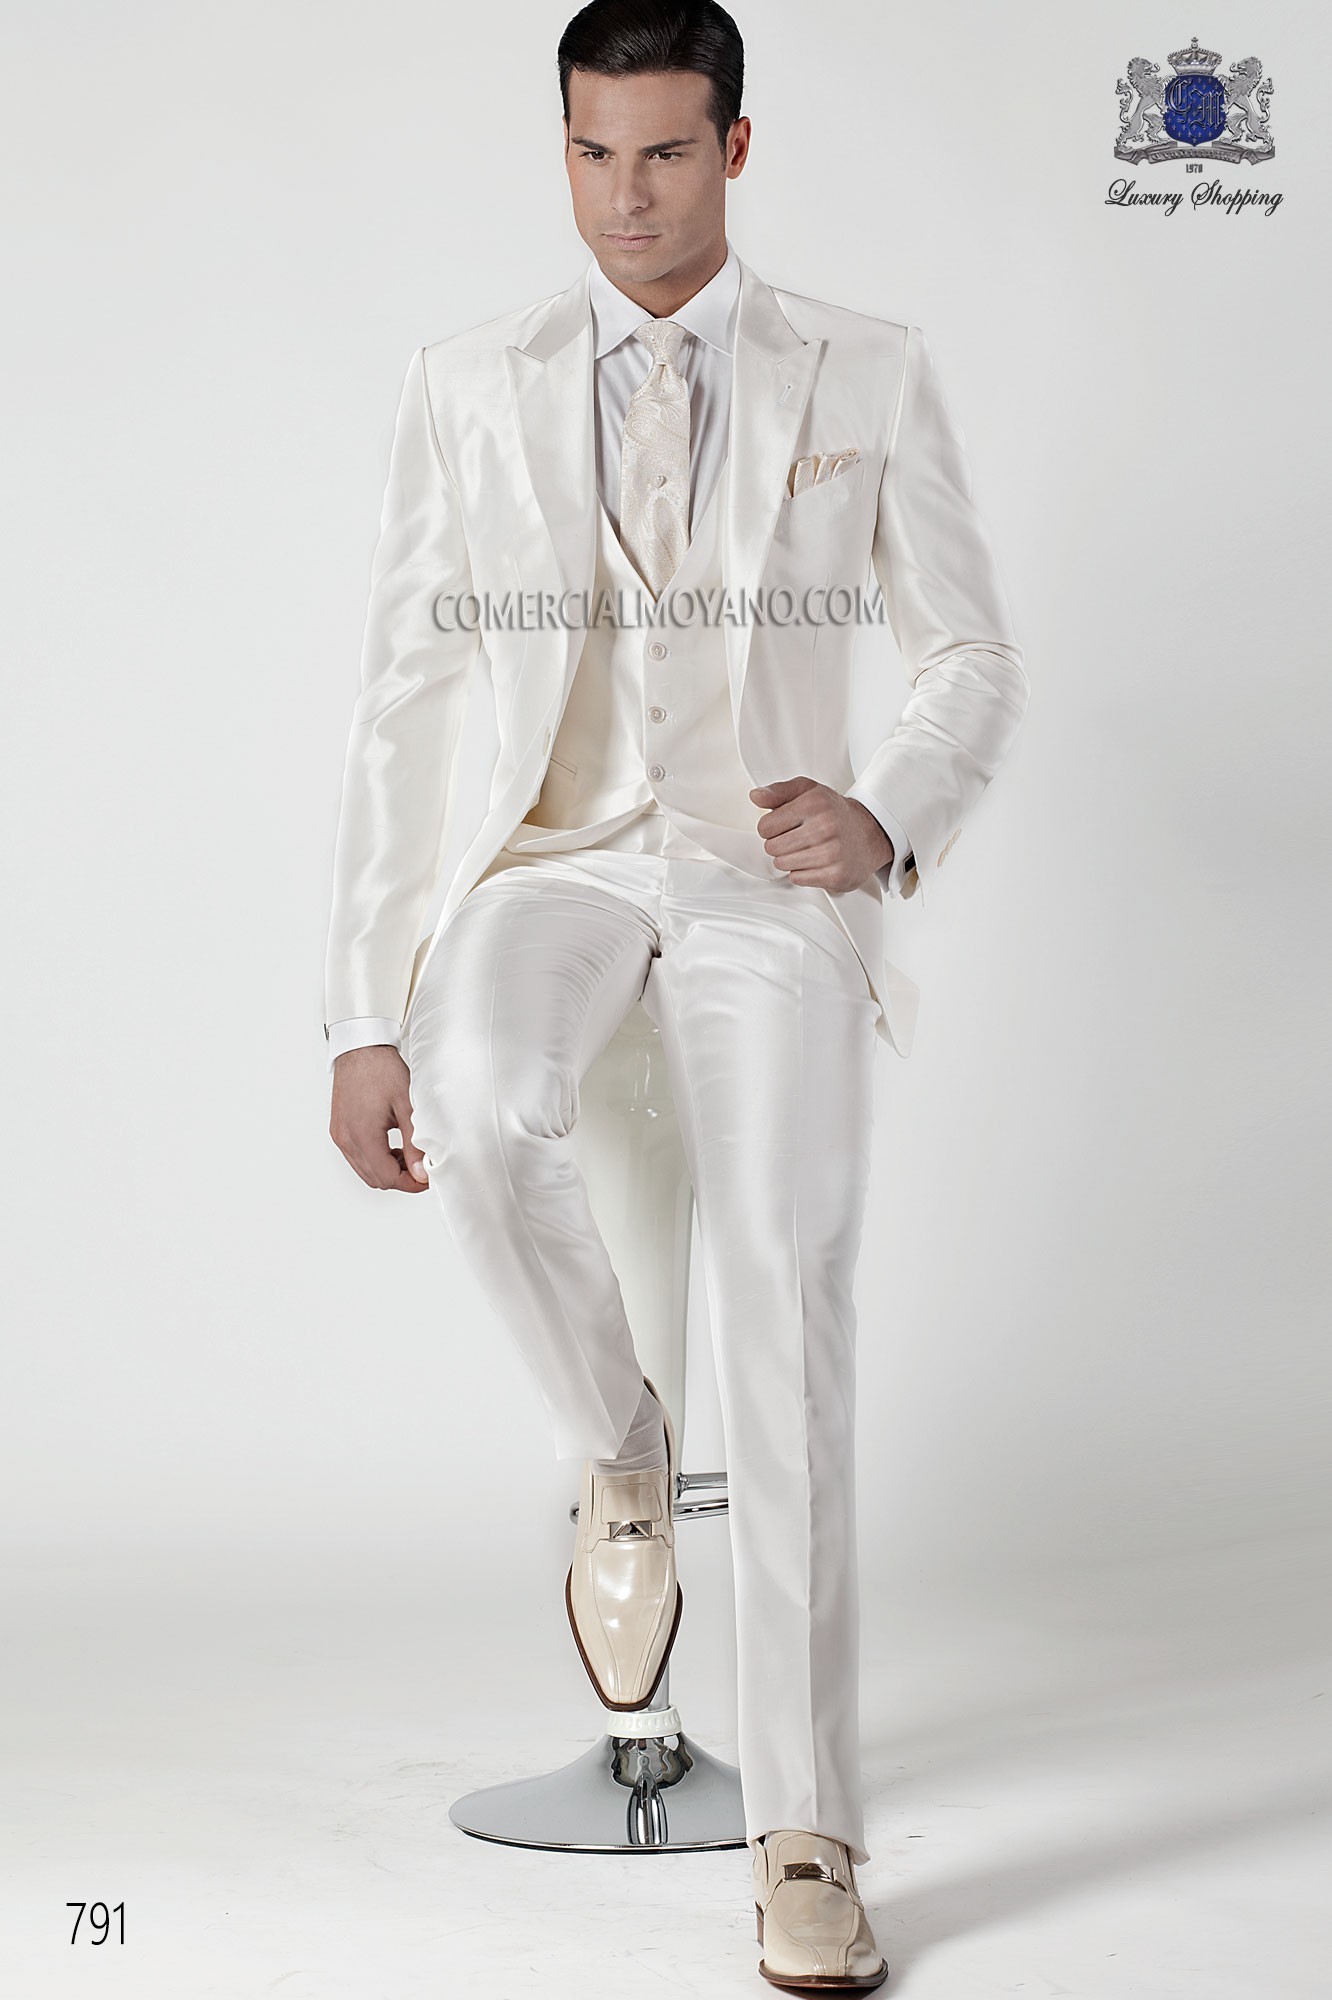 Hipster white men wedding suit model 791 Mario Moyano